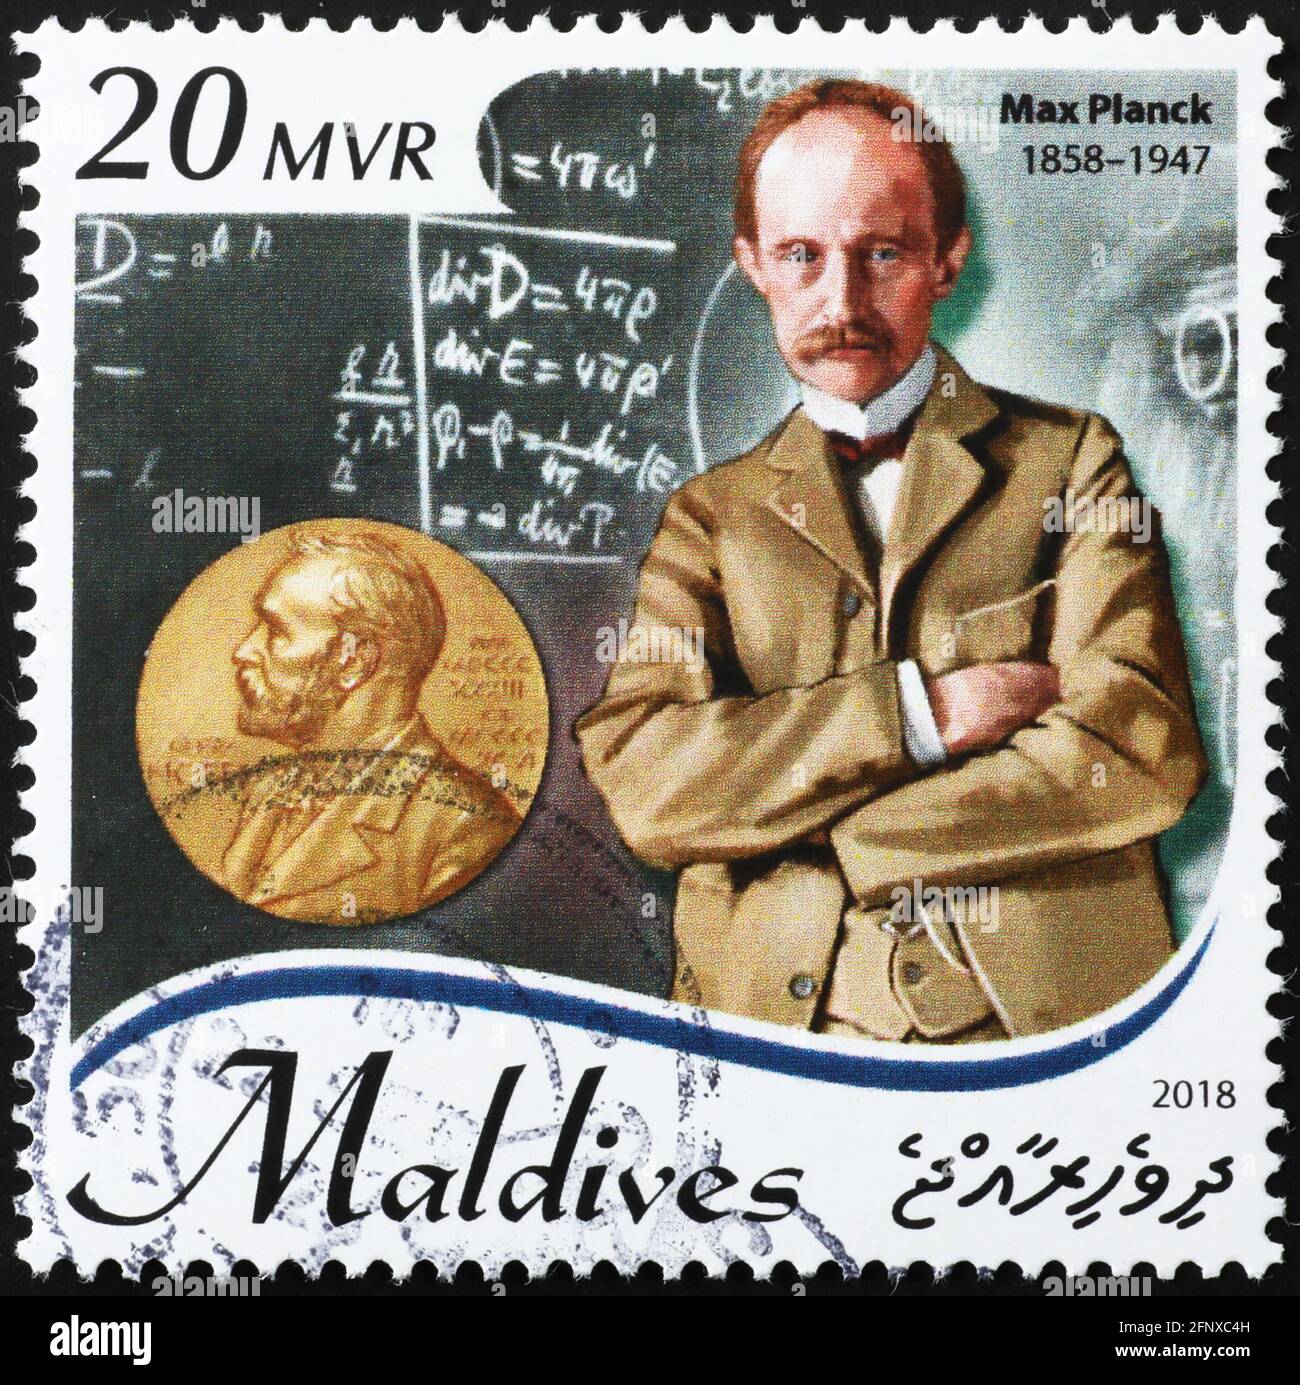 Nobel prize Max Planck on postage stamp Stock Photo